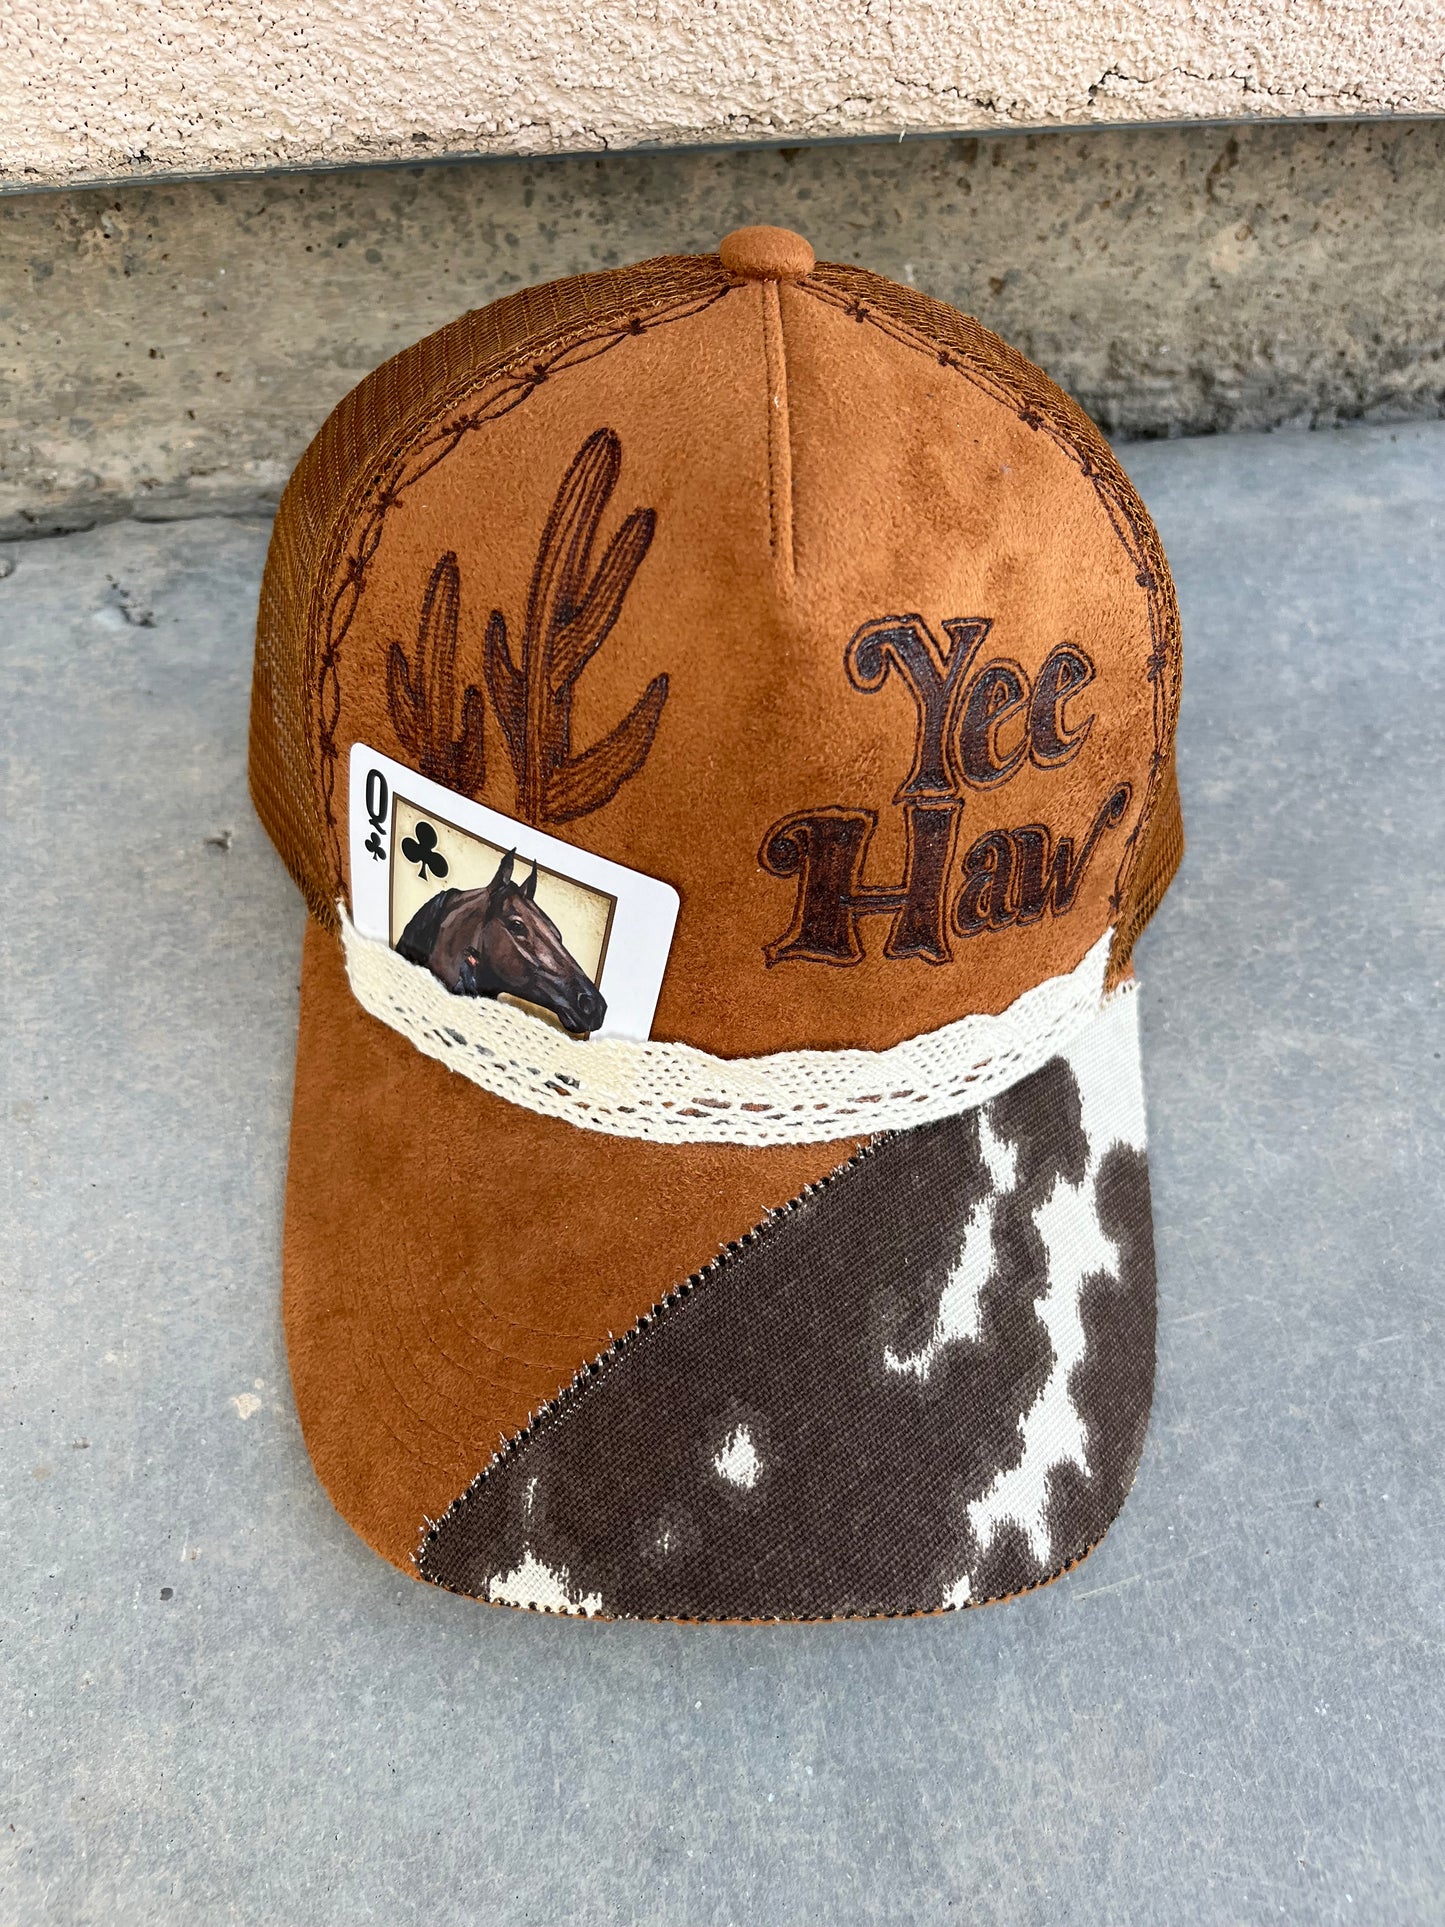 Camel yeehaw cow print burned trucker hat custom ball cap SnapBack